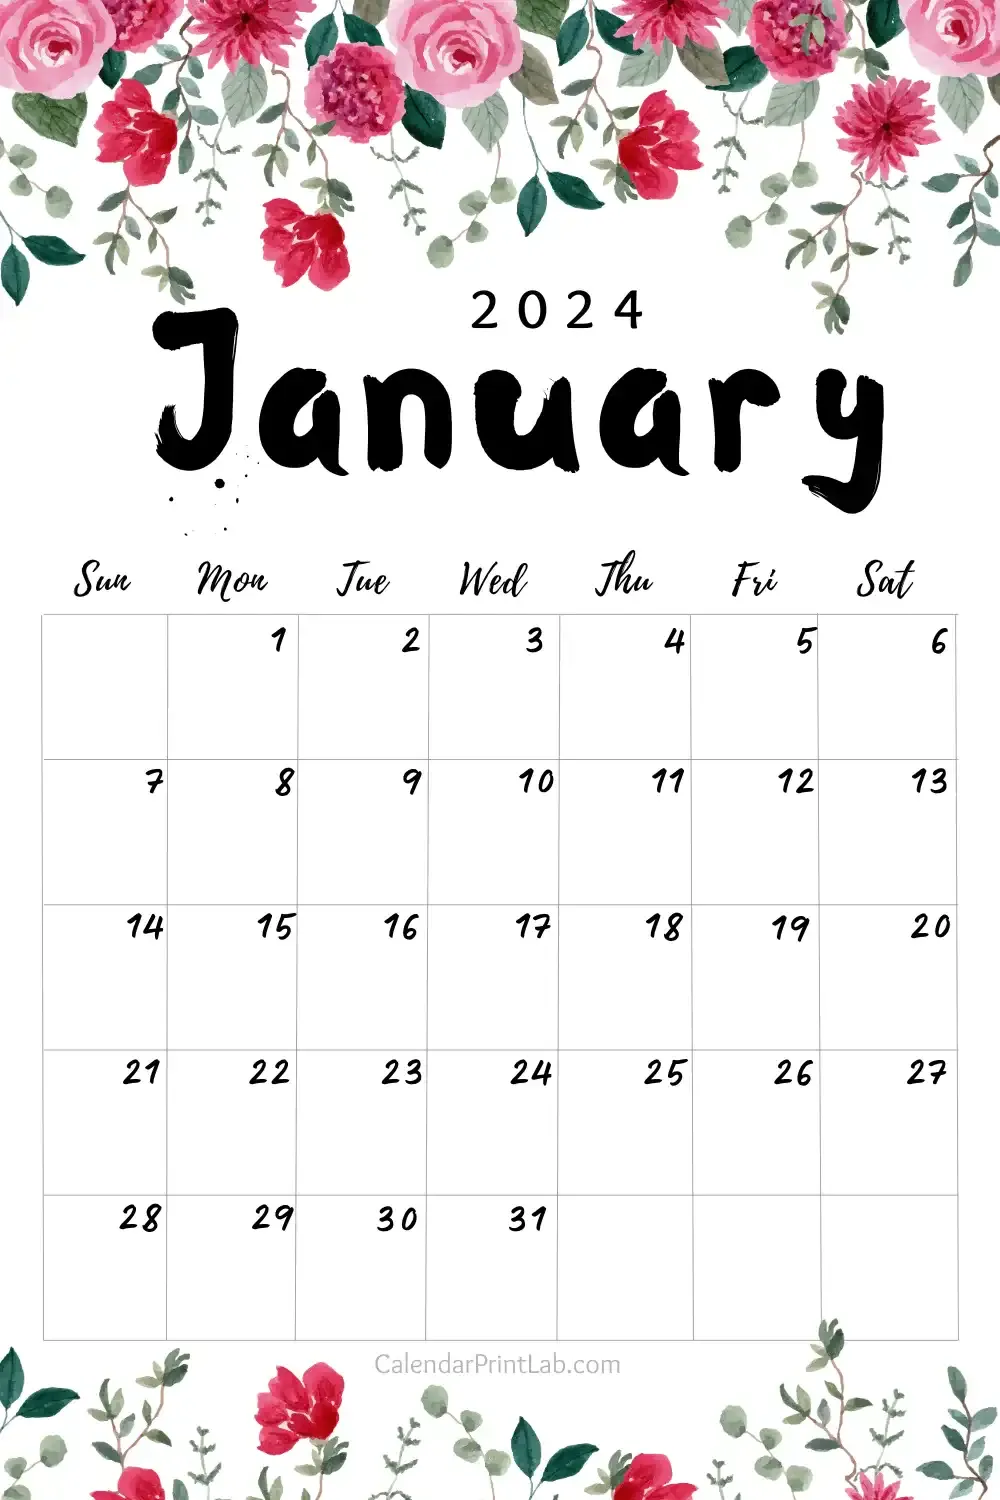 January 2024 Floral Calendar